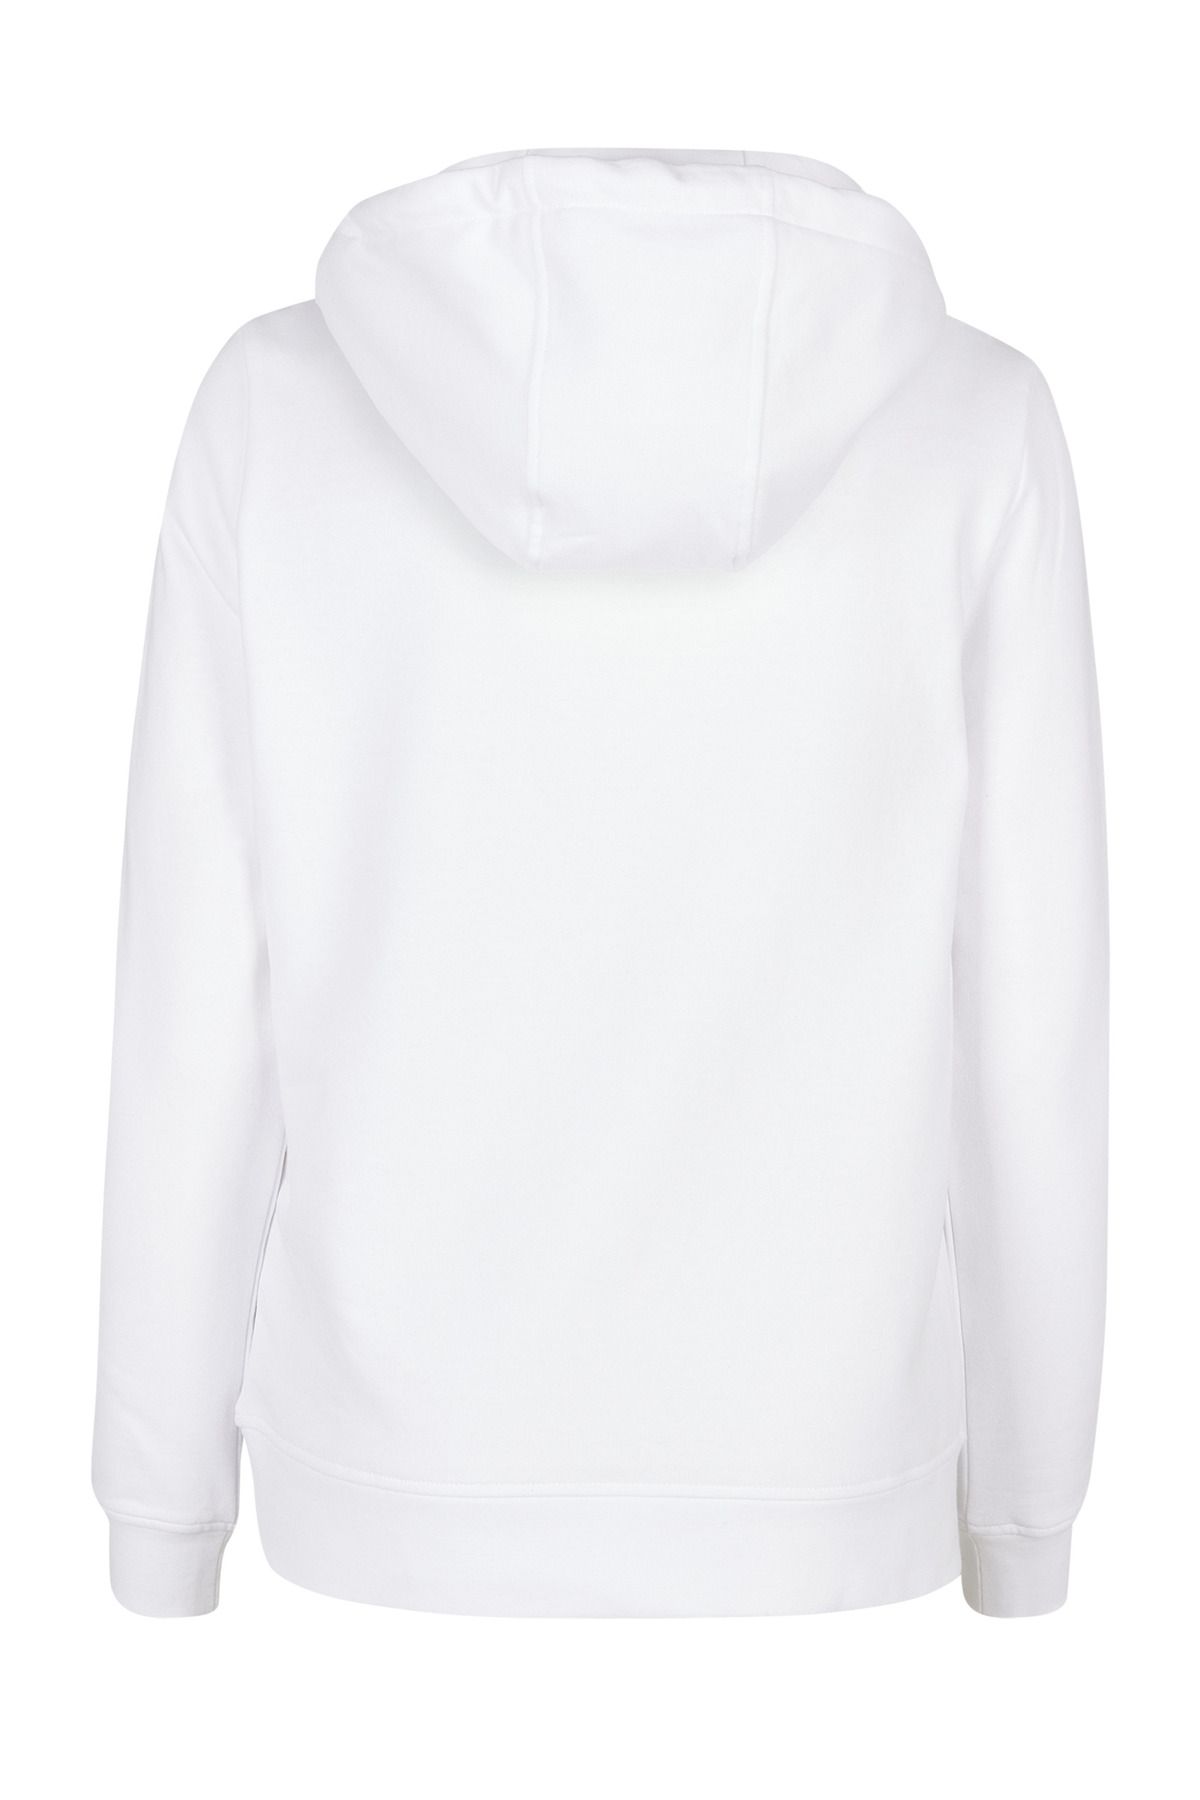 F4NT4STIC Sweatshirt - Weiß - Trendyol - Fit Regular